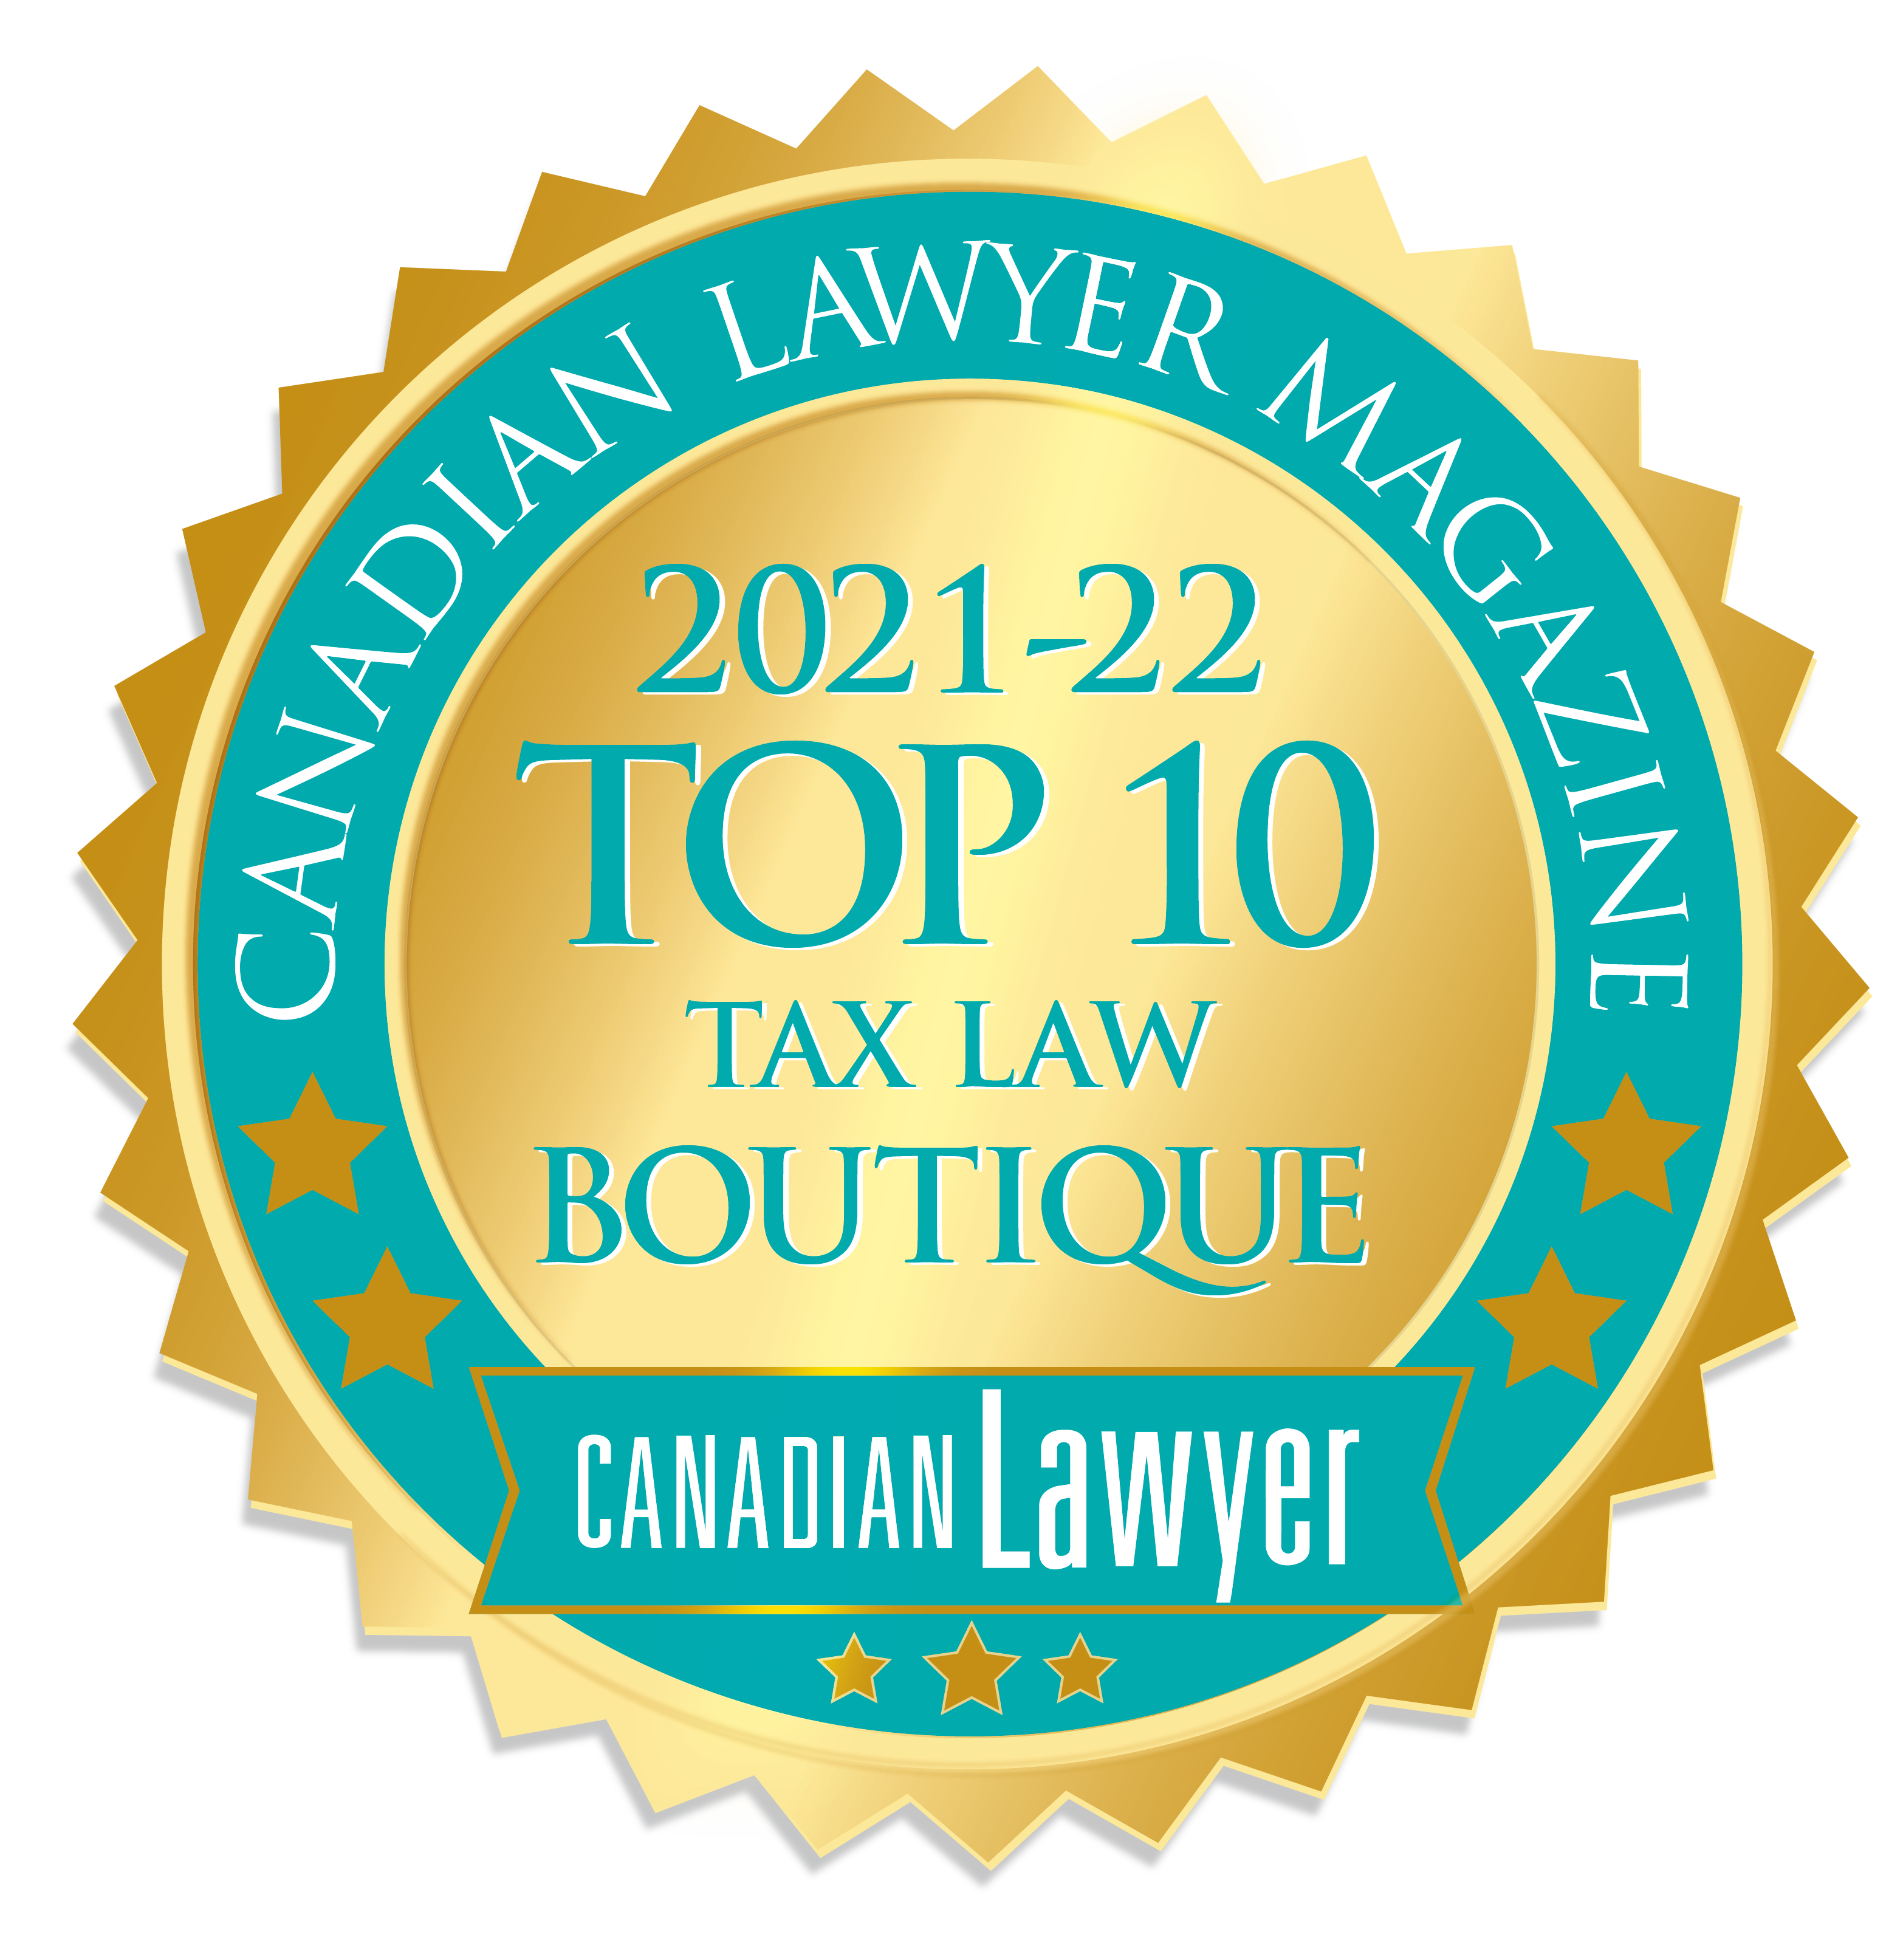 Top Law Boutique Award 2021